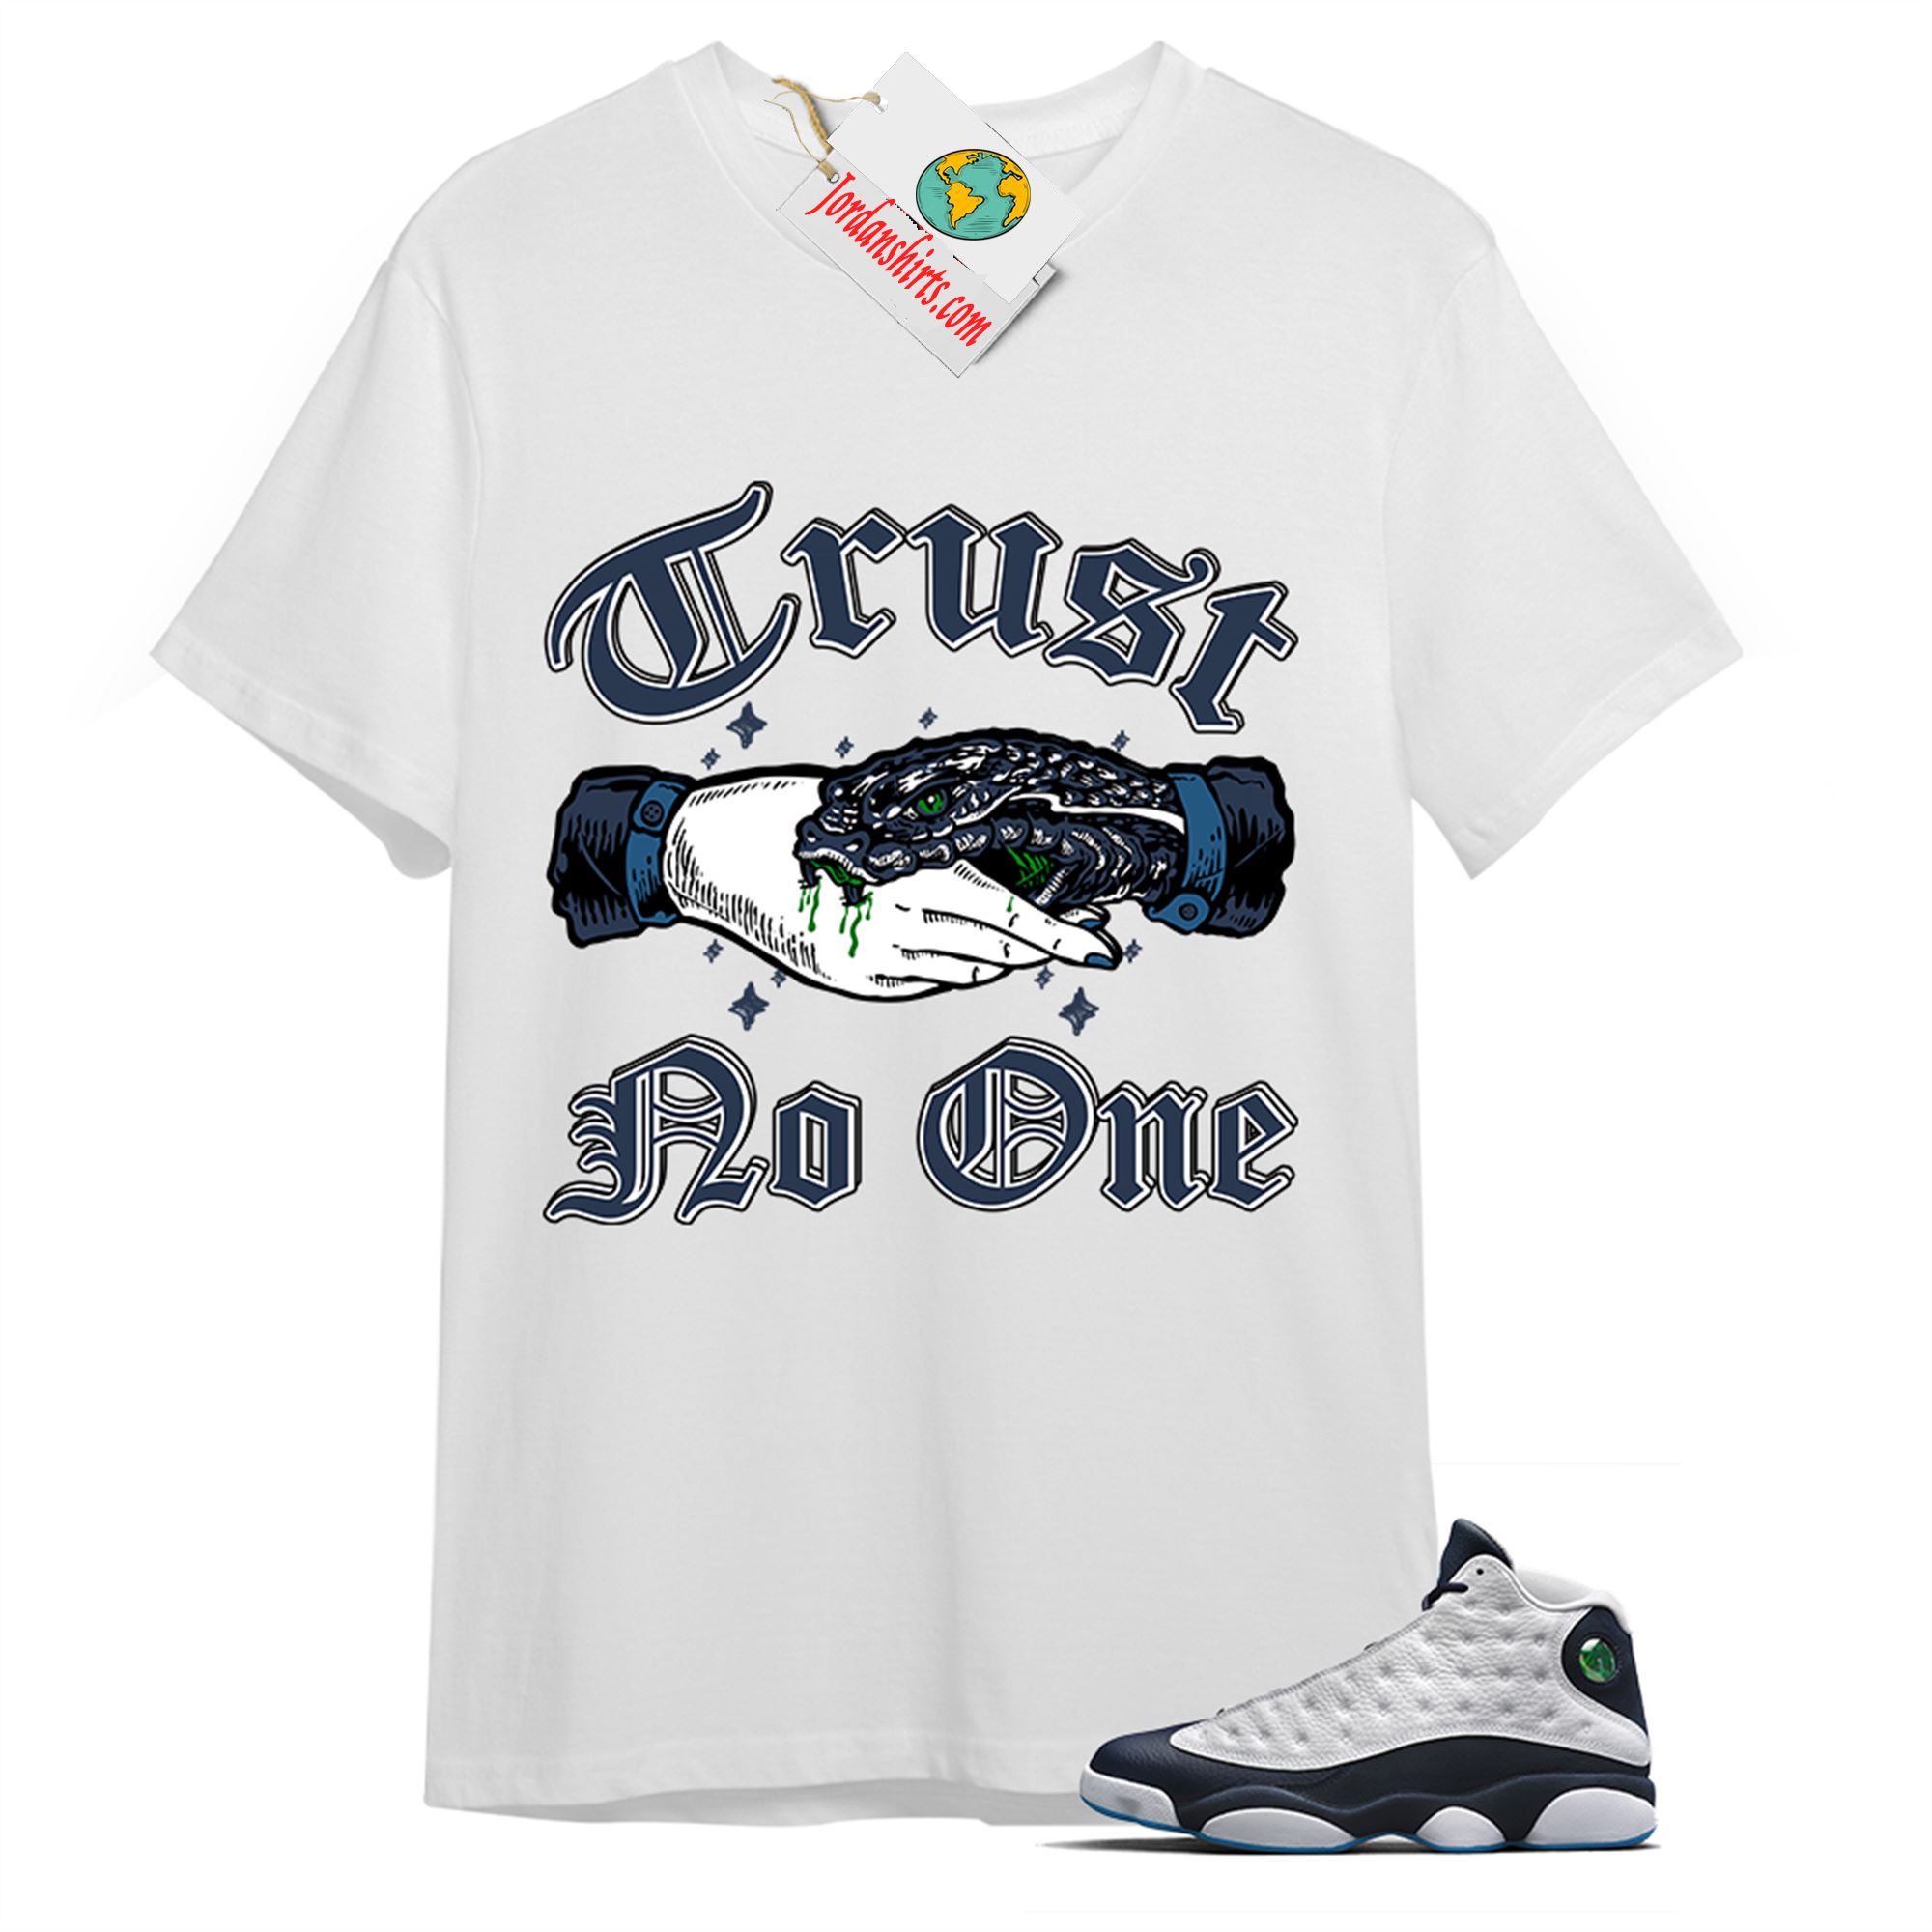 Jordan 13 Shirt, Trust No One Deal With Snake White T-shirt Air Jordan 13 Obsidian 13s Size Up To 5xl